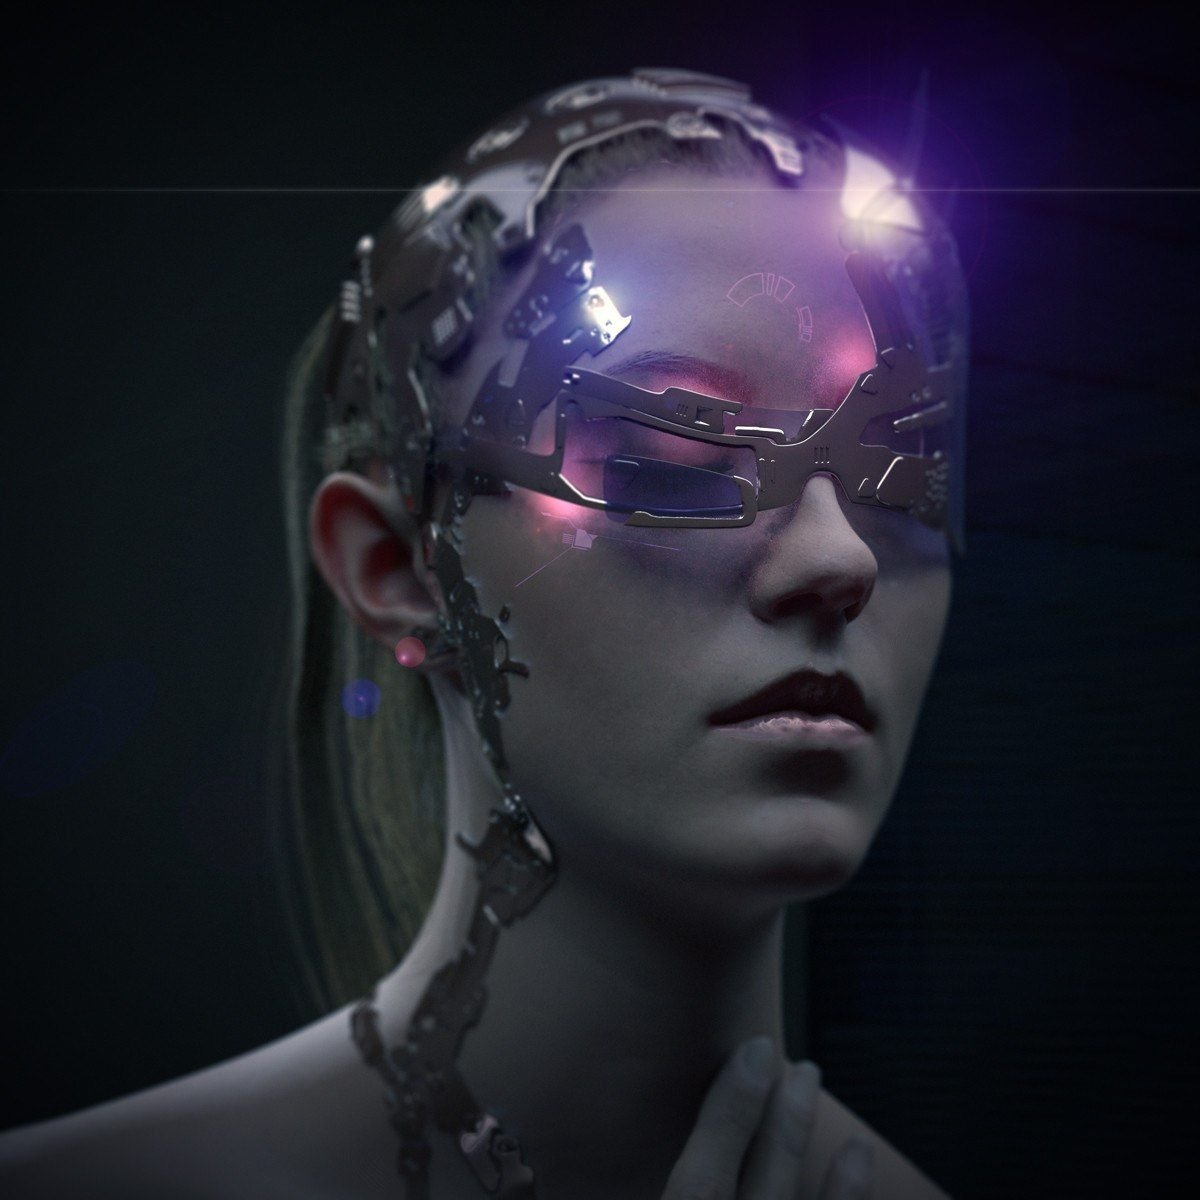 Аватар искусственный интеллект. Элизабет киберпанк 2077. Cyberpunk 2077 Эстетика. Киборг 2077. Киберпанк 2077 роботы.